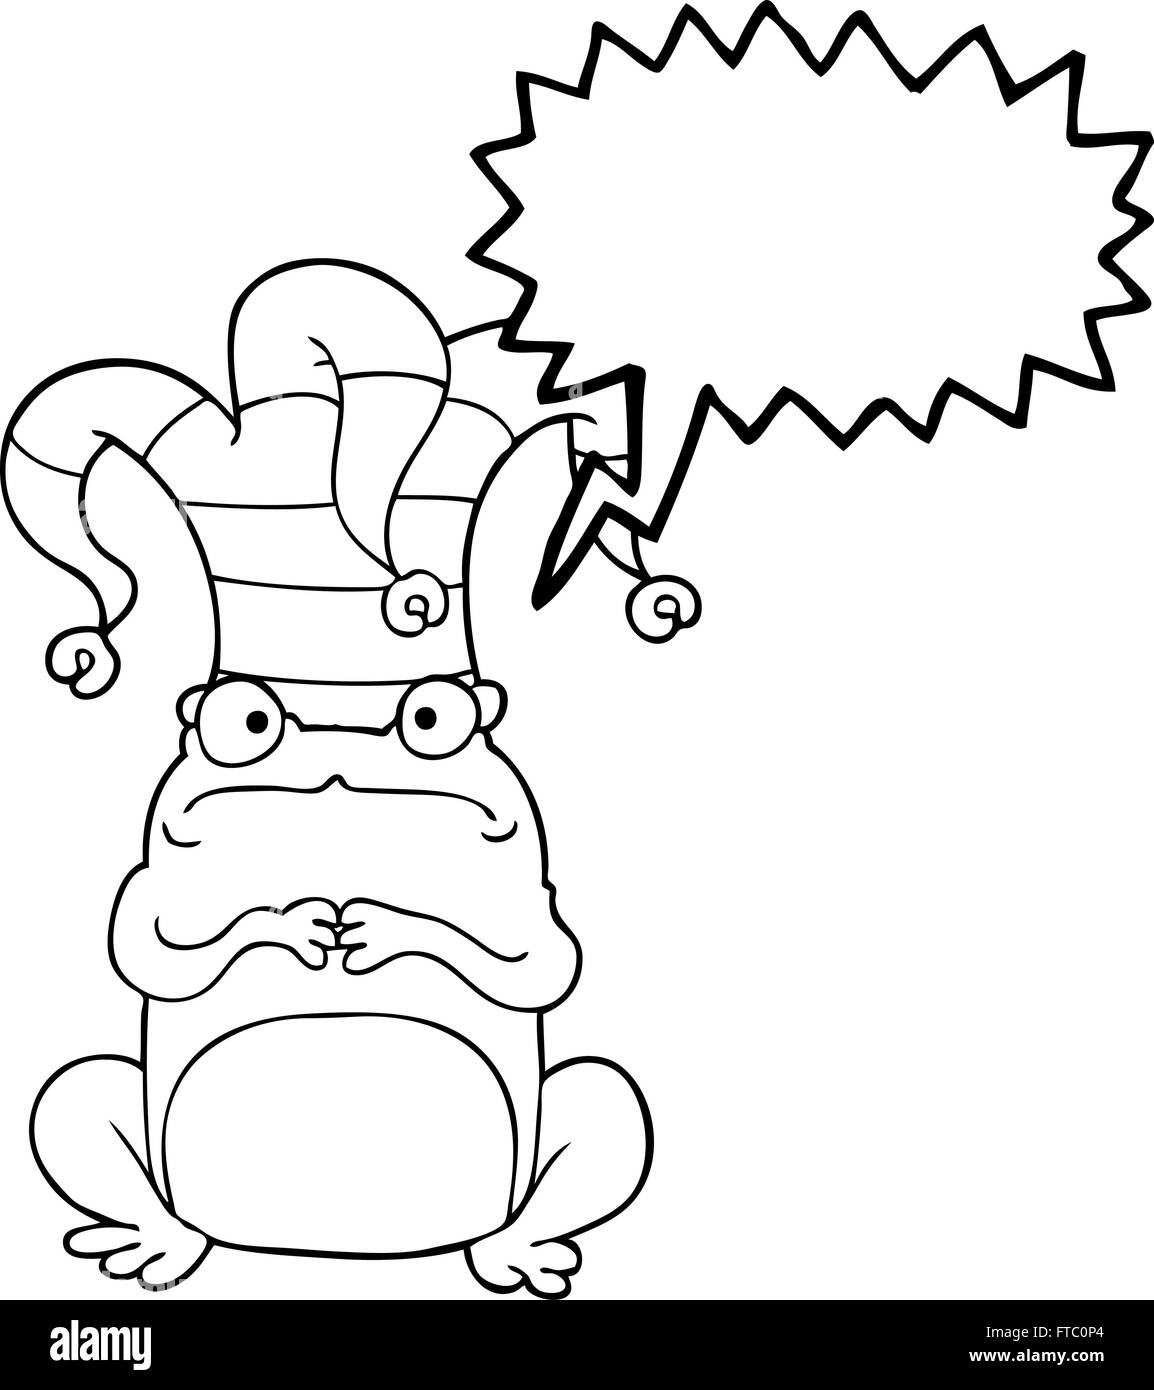 freehand drawn speech bubble cartoon frog wearing jester hat Stock Vector